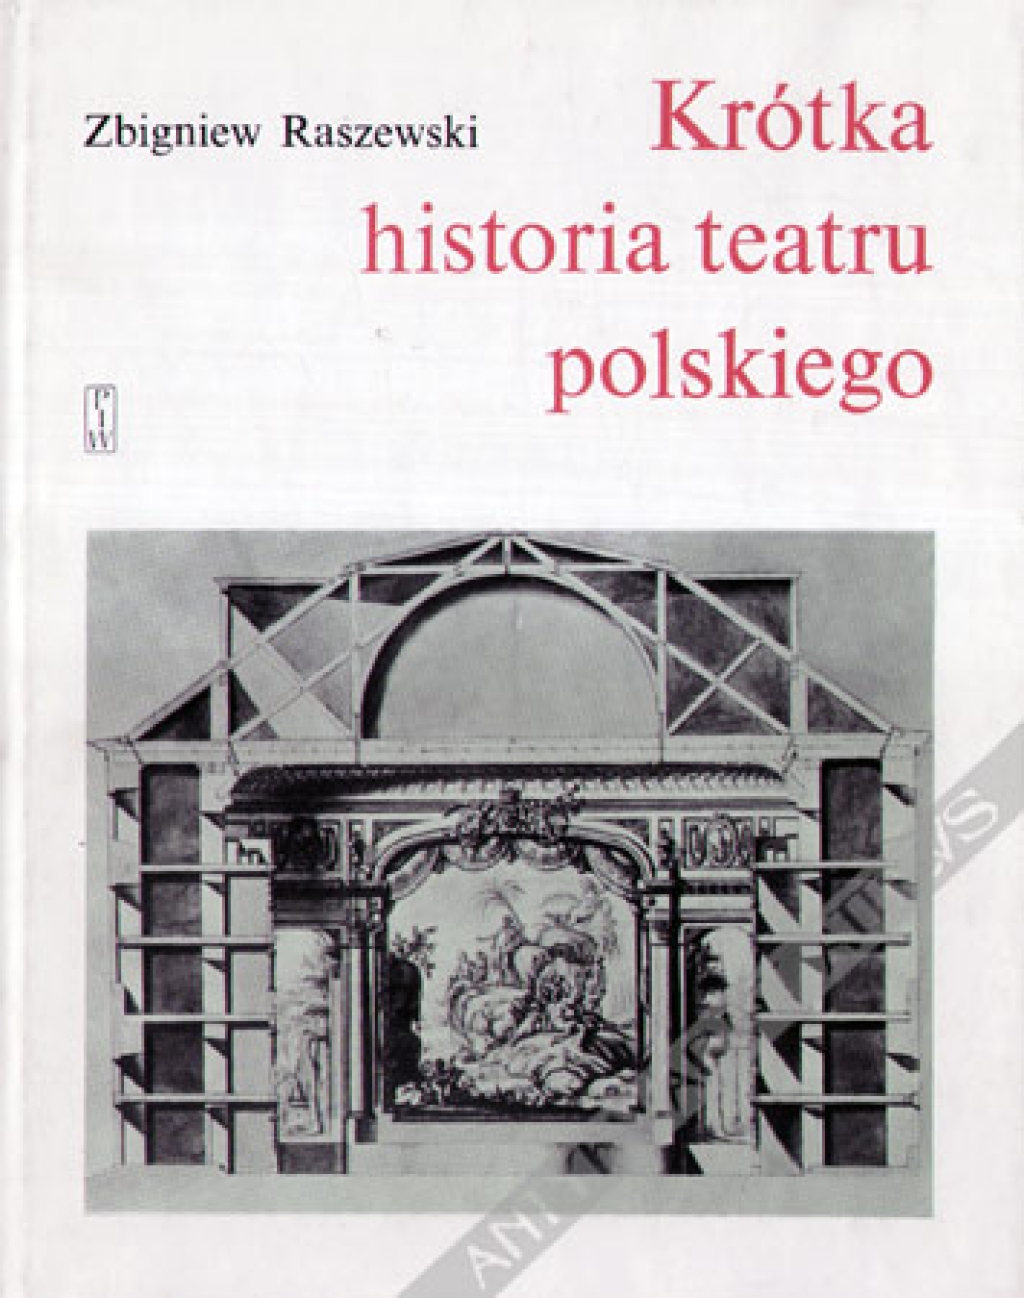 Krótka historia teatru polskiego